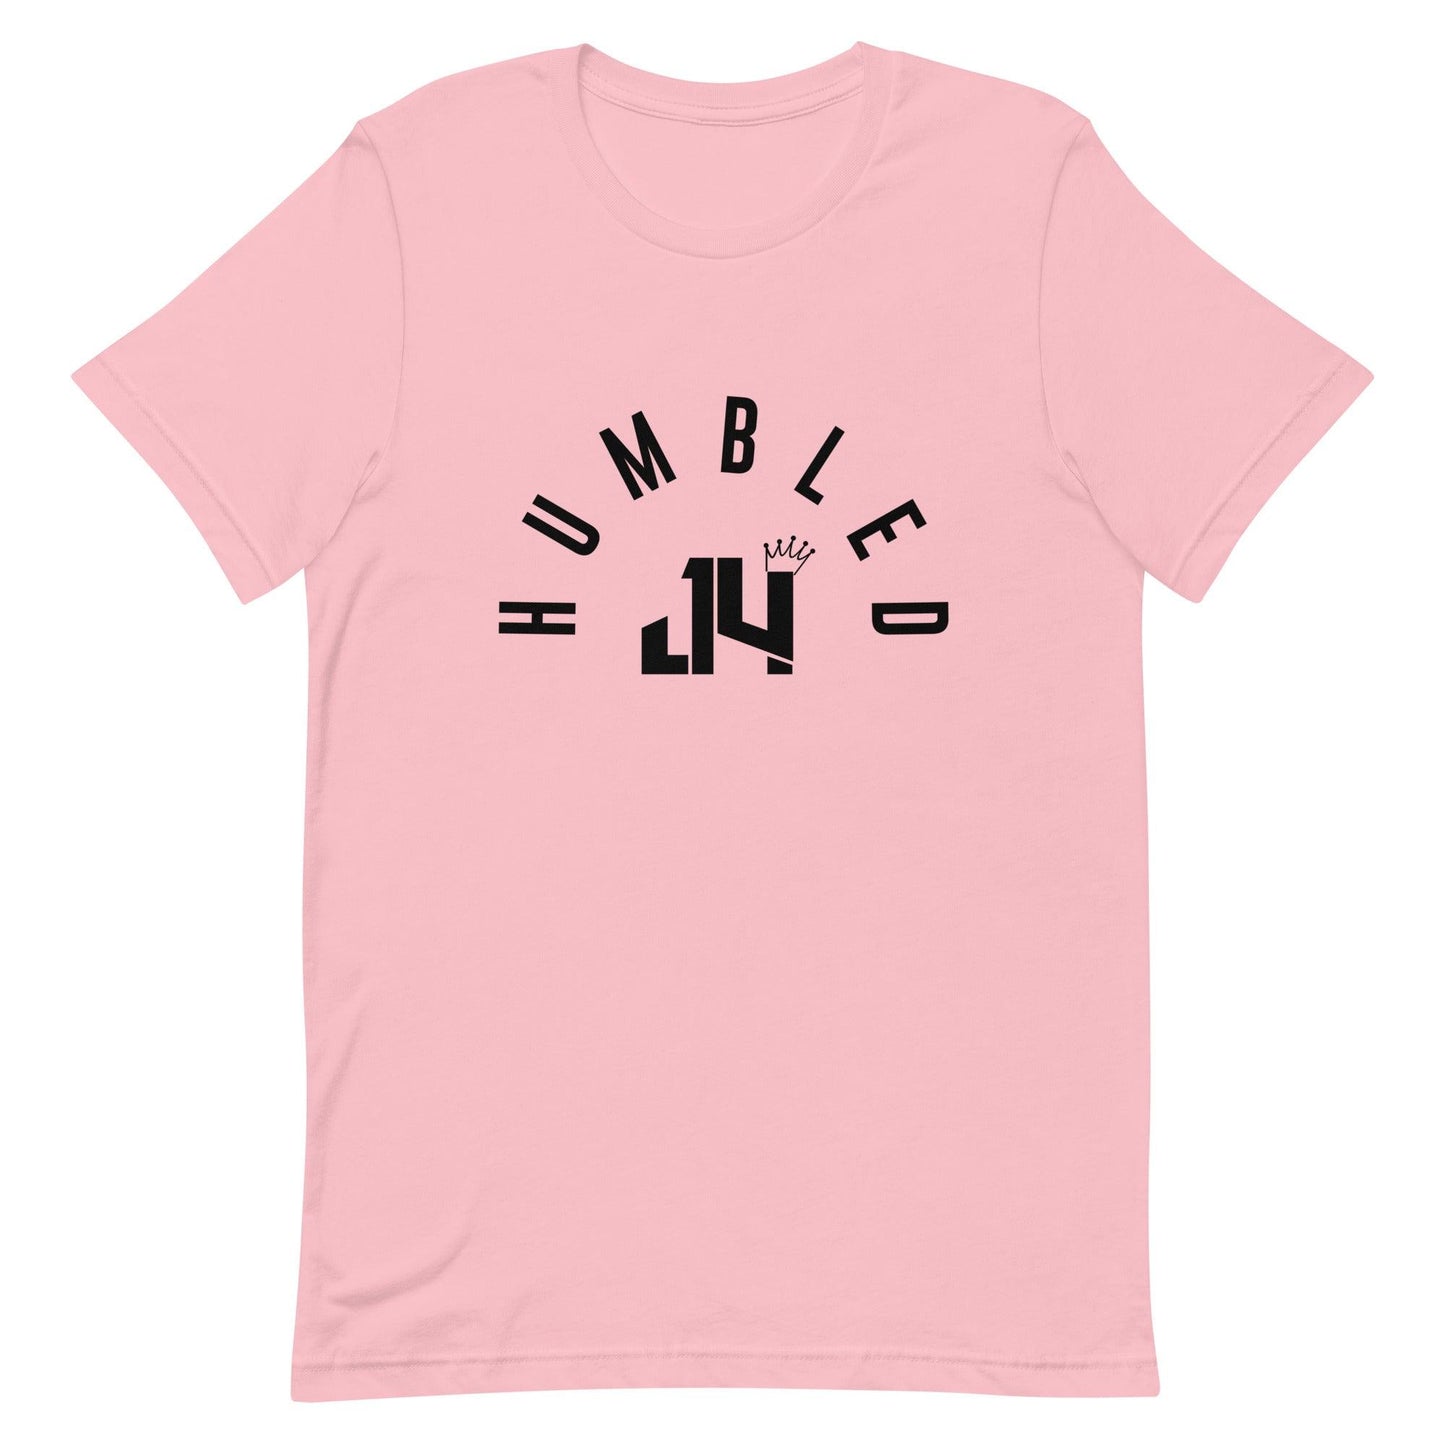 Jeff Foreman “Humbled” t-shirt - Fan Arch